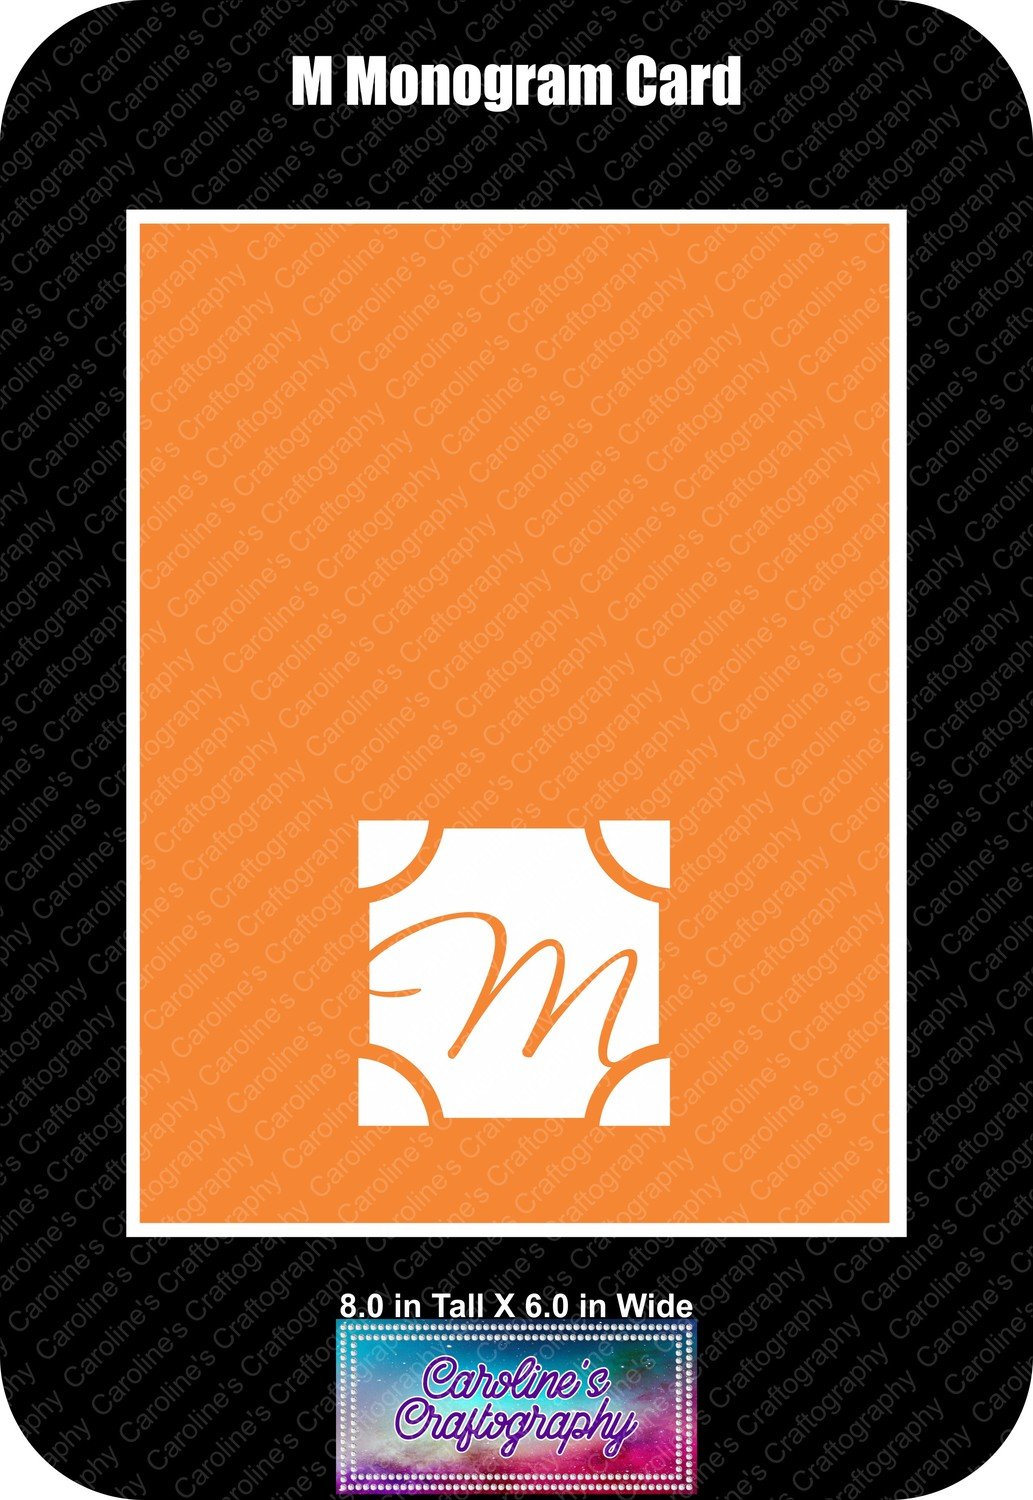 M Monogram Card Base